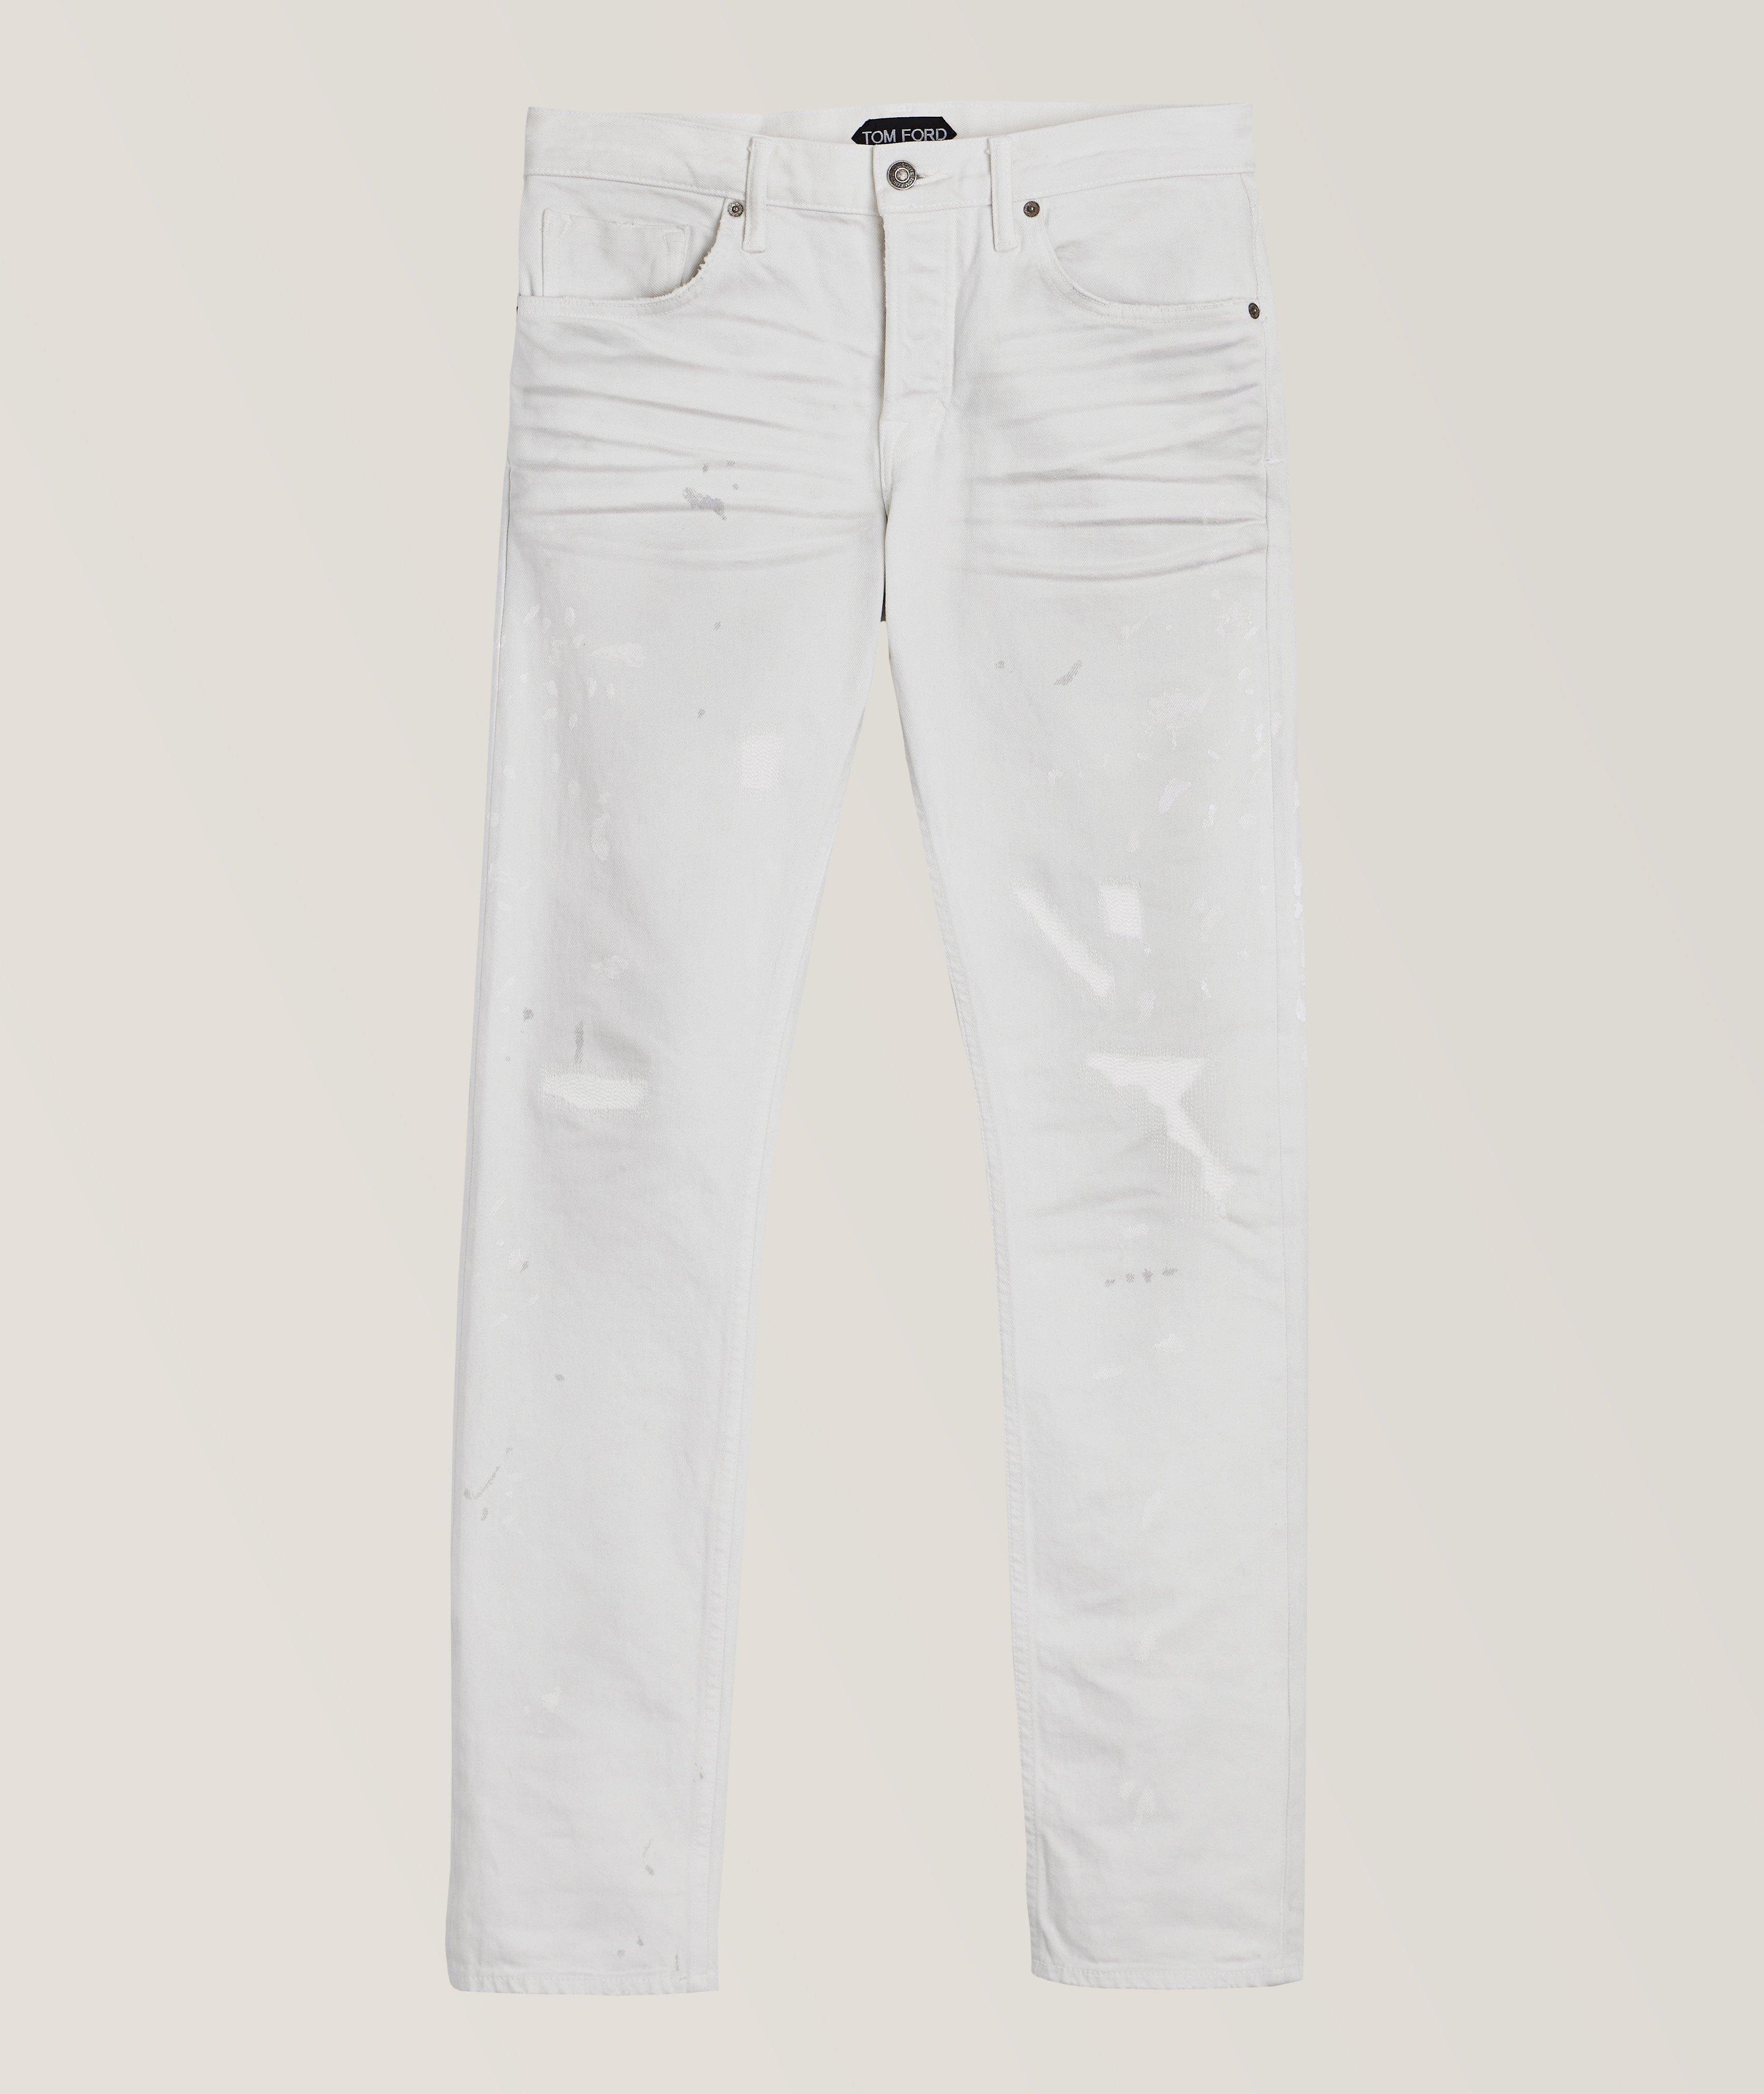 Slim-Fit Japanese Selvedge Cotton Blend Jeans image 0